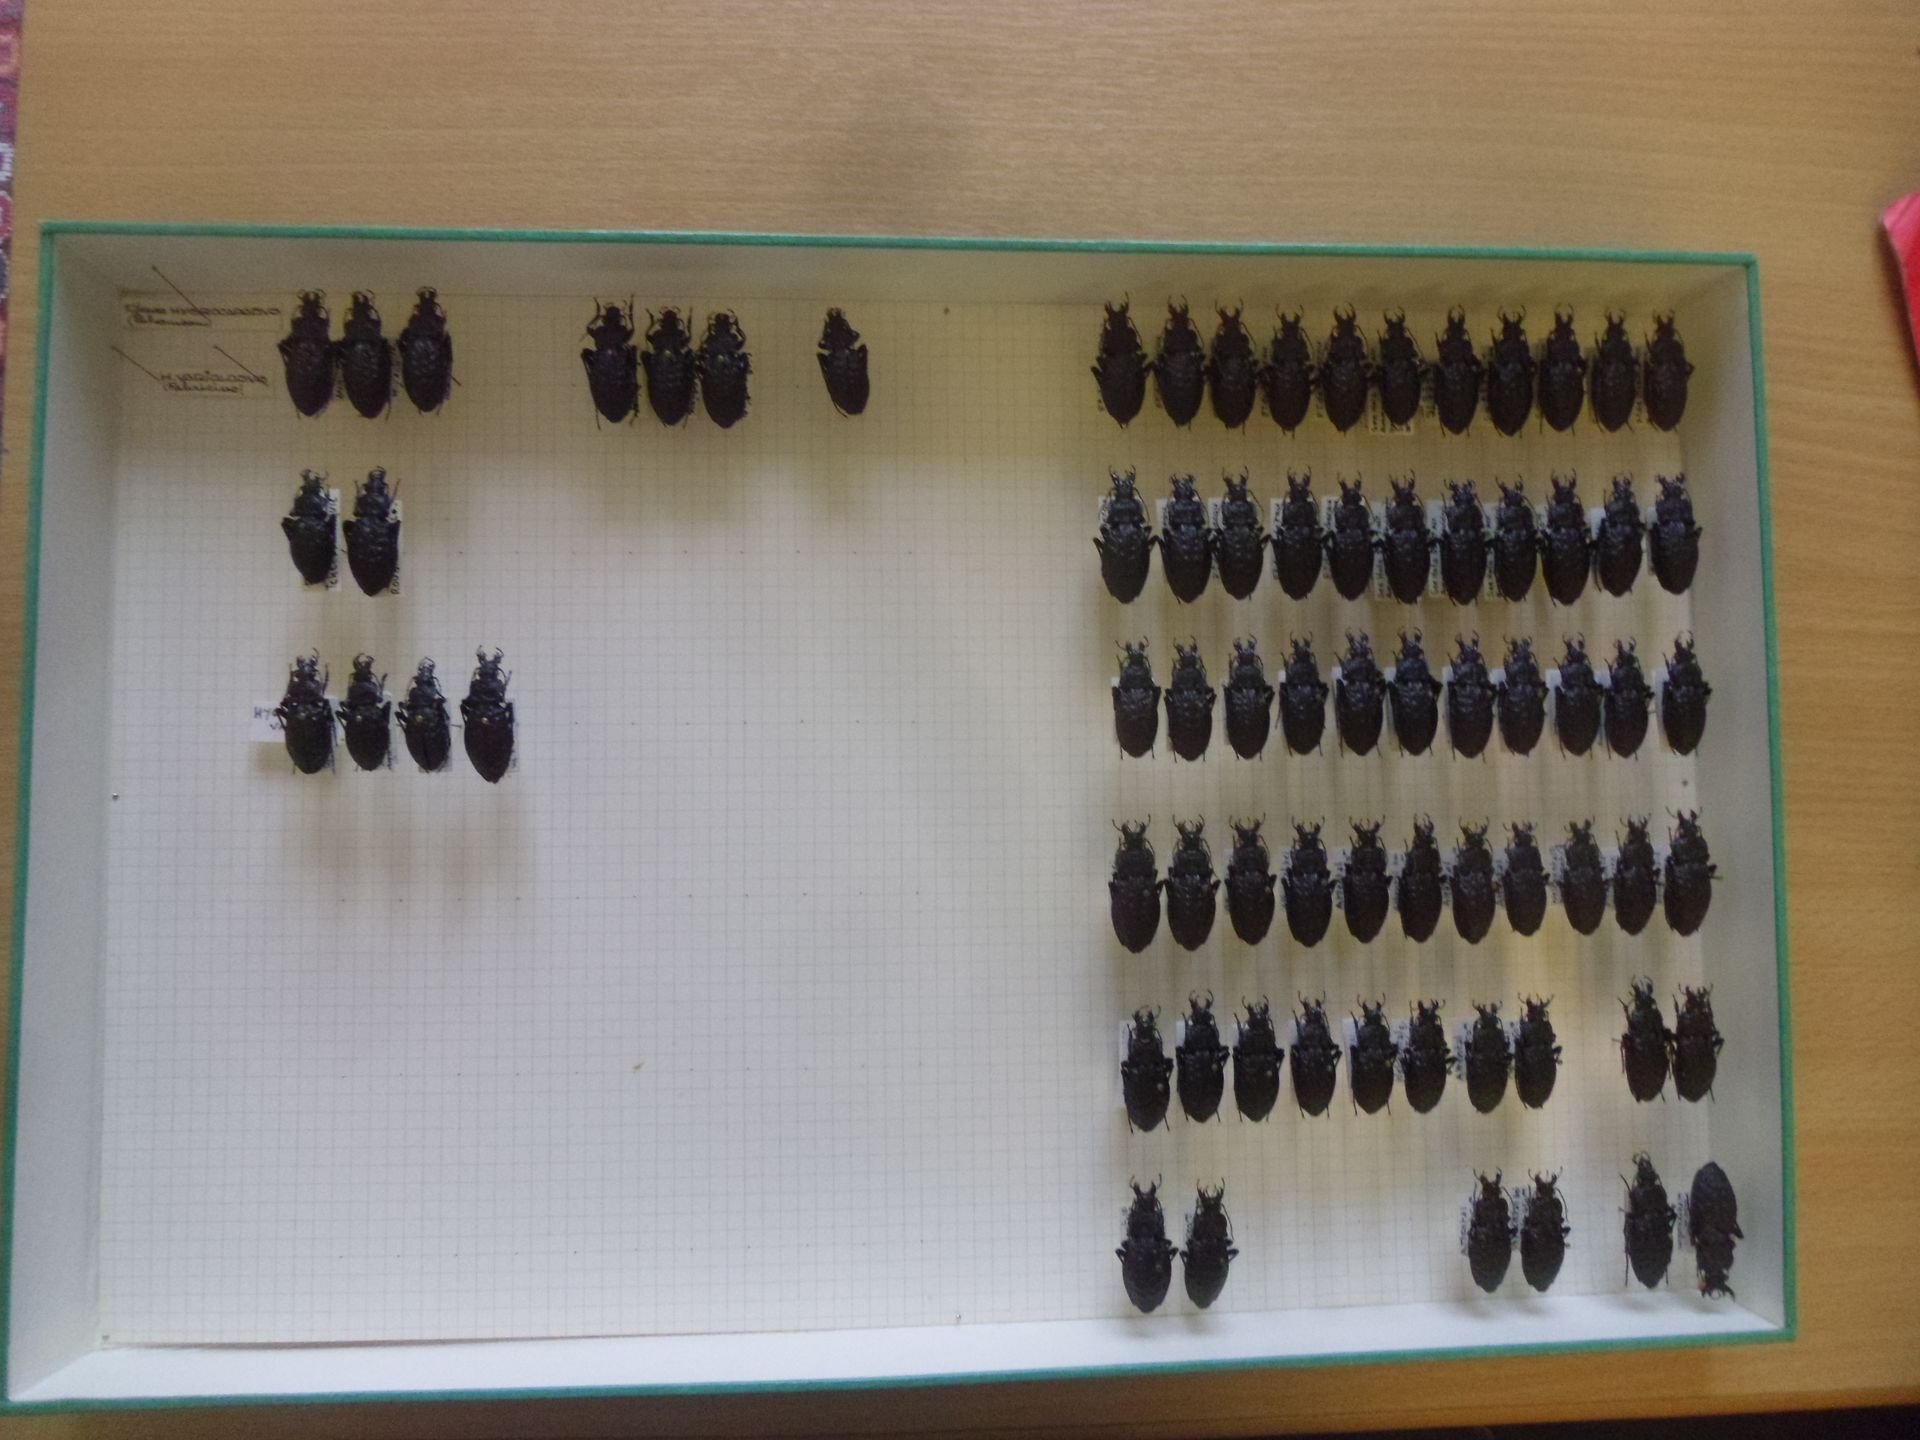 Null 无釉昆虫盒，内装 60 多件欧洲甲虫标本，其中包括 Hydrocarabus variolosus variolosus
标本采集于 1957 年、1&hellip;